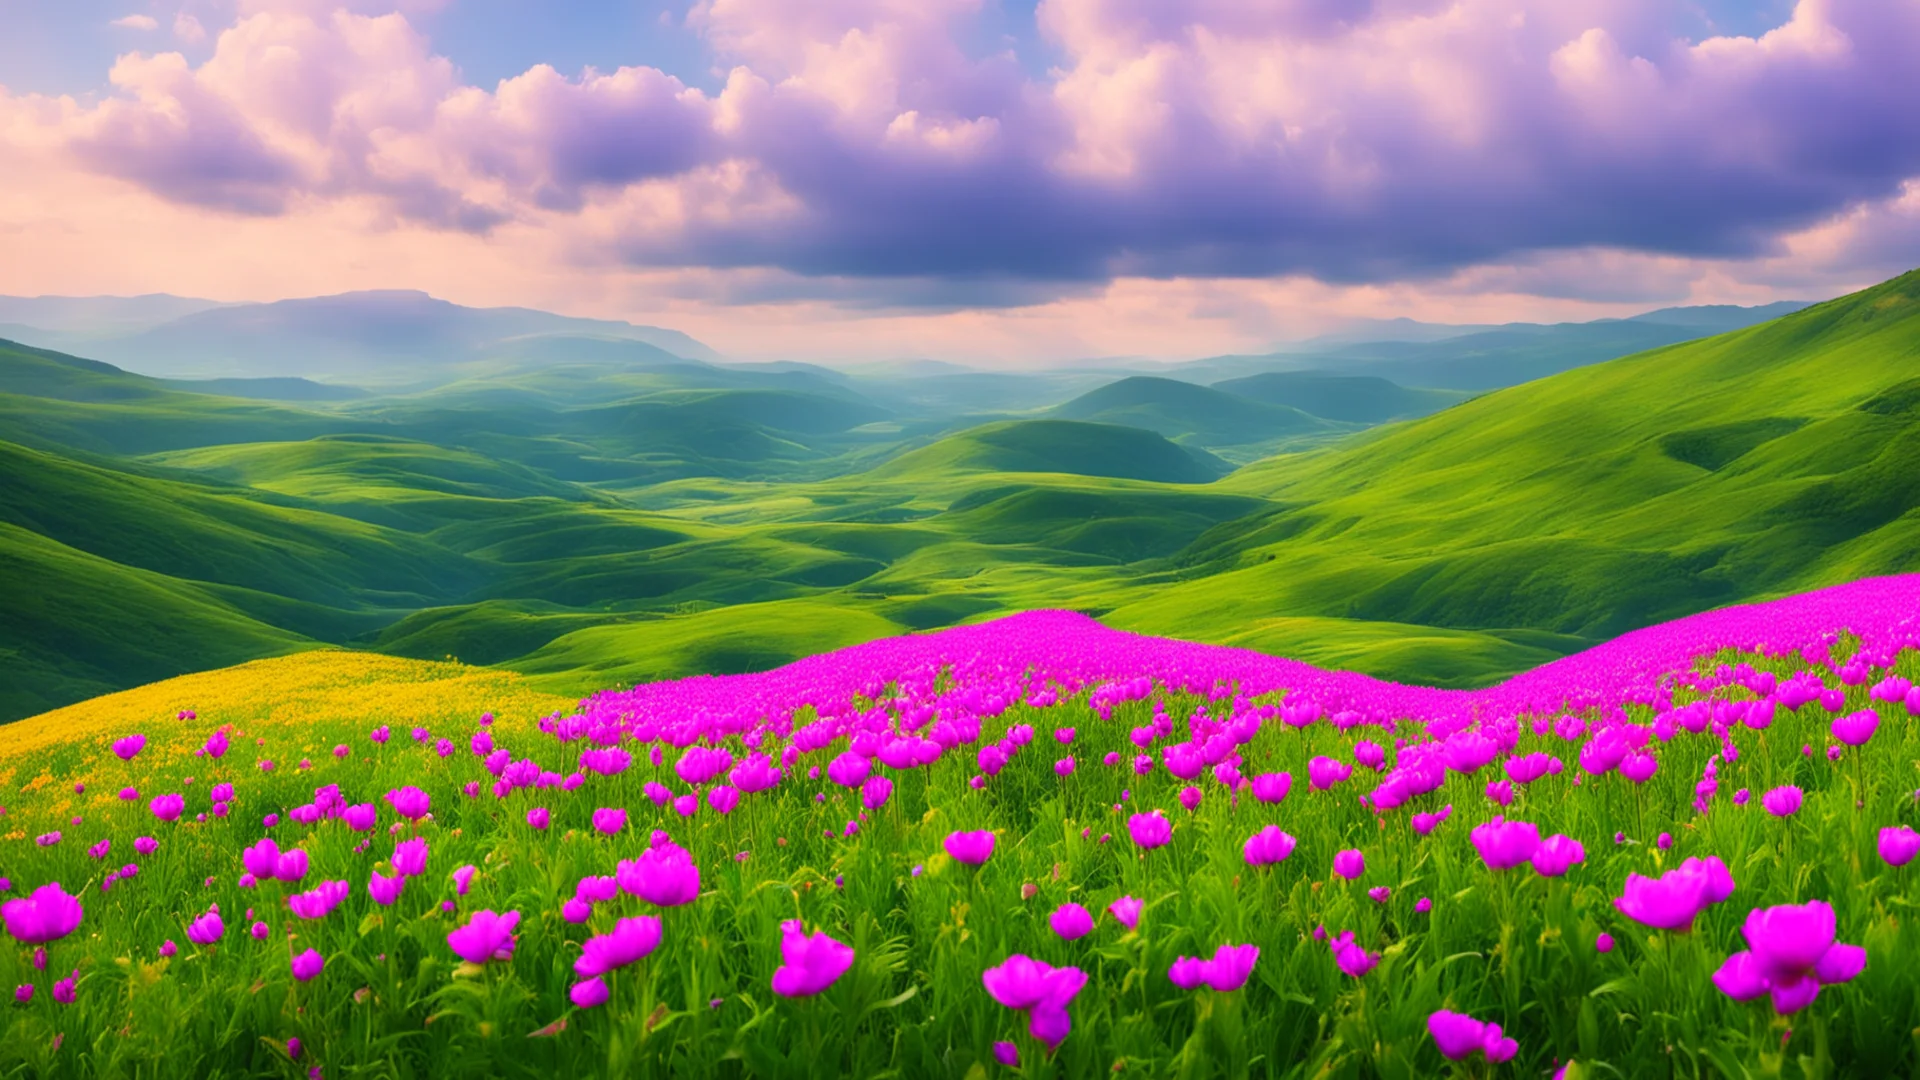 beautiful scenery amazing land peaceful lowfi flowers hills amazing awesome portrait 2 wide